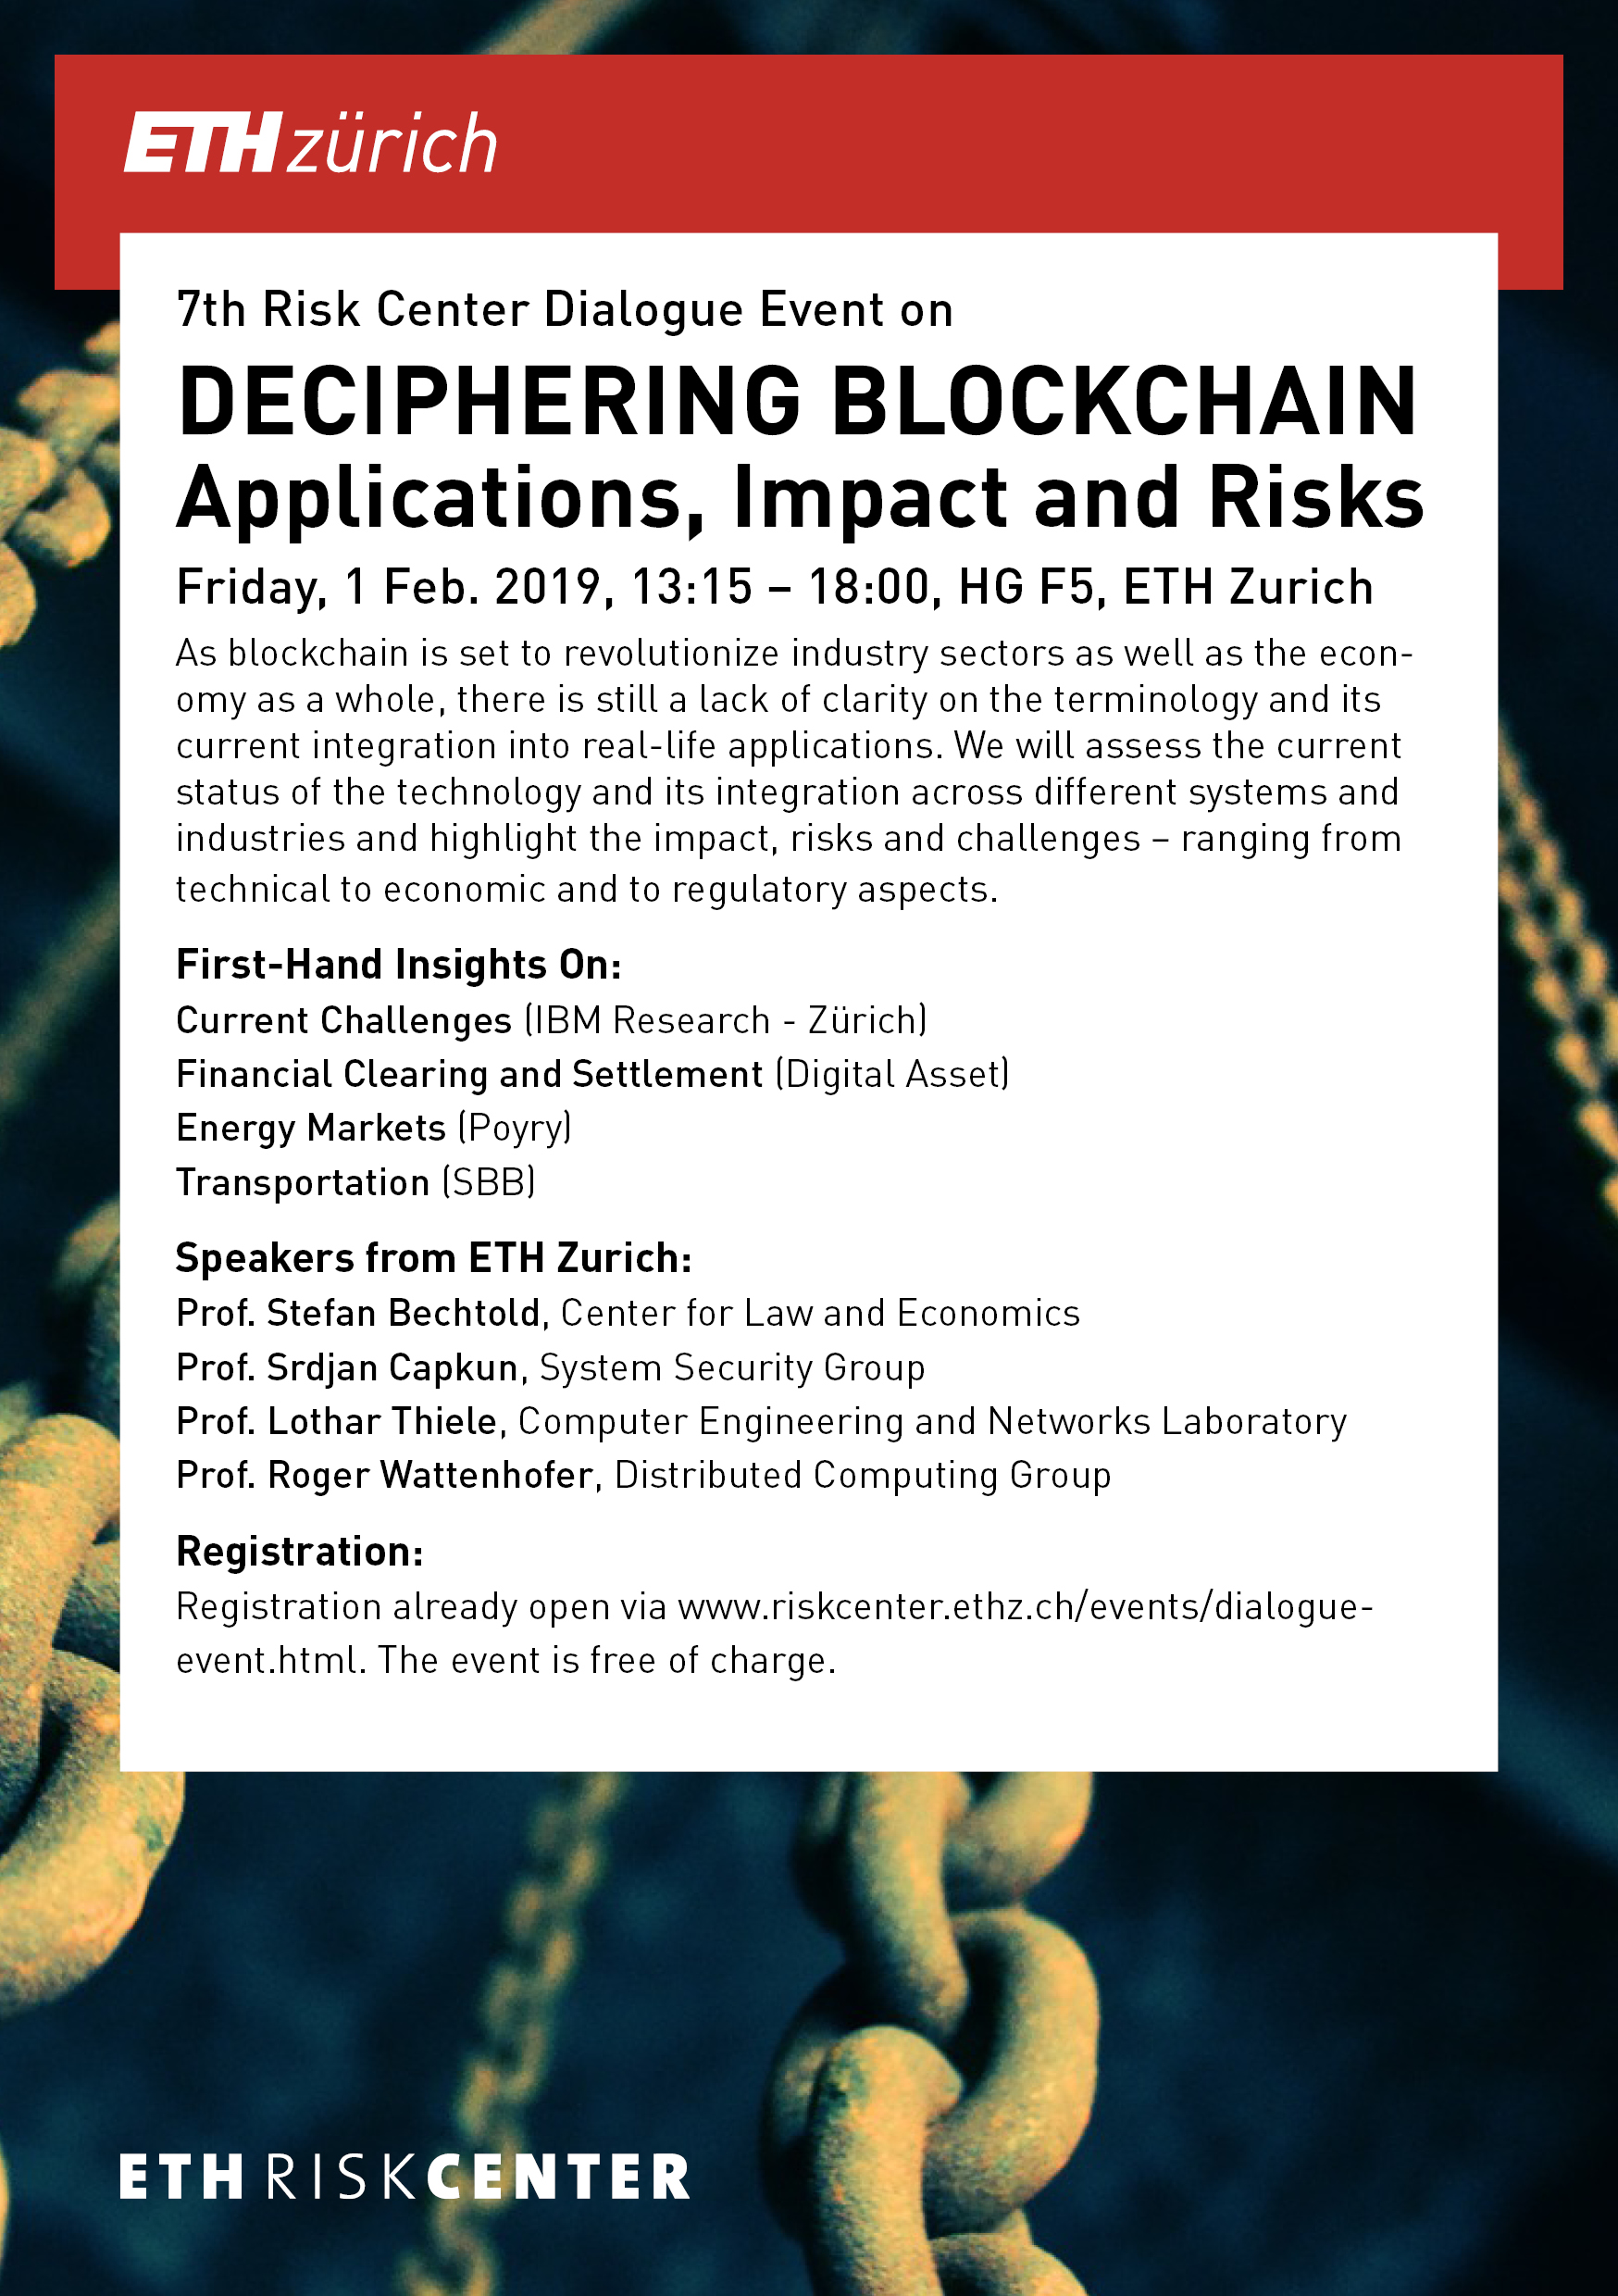 Deciphering Blockchain Event